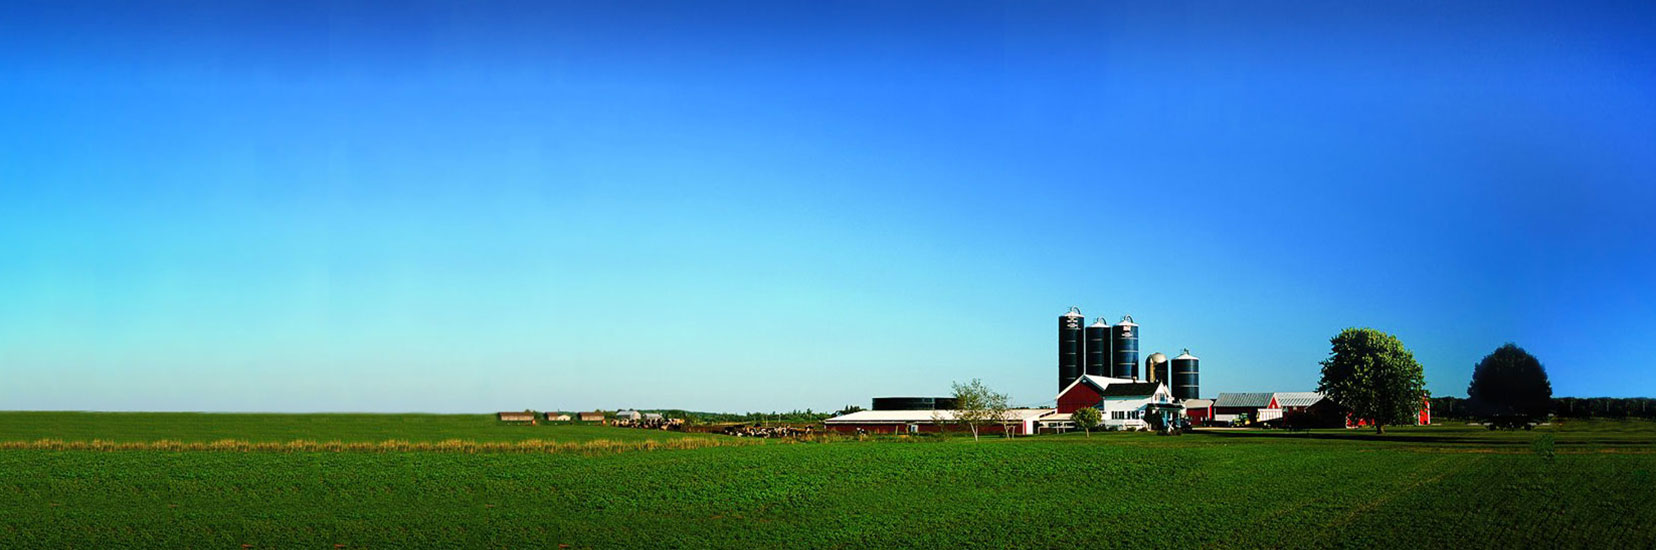 Image of farm